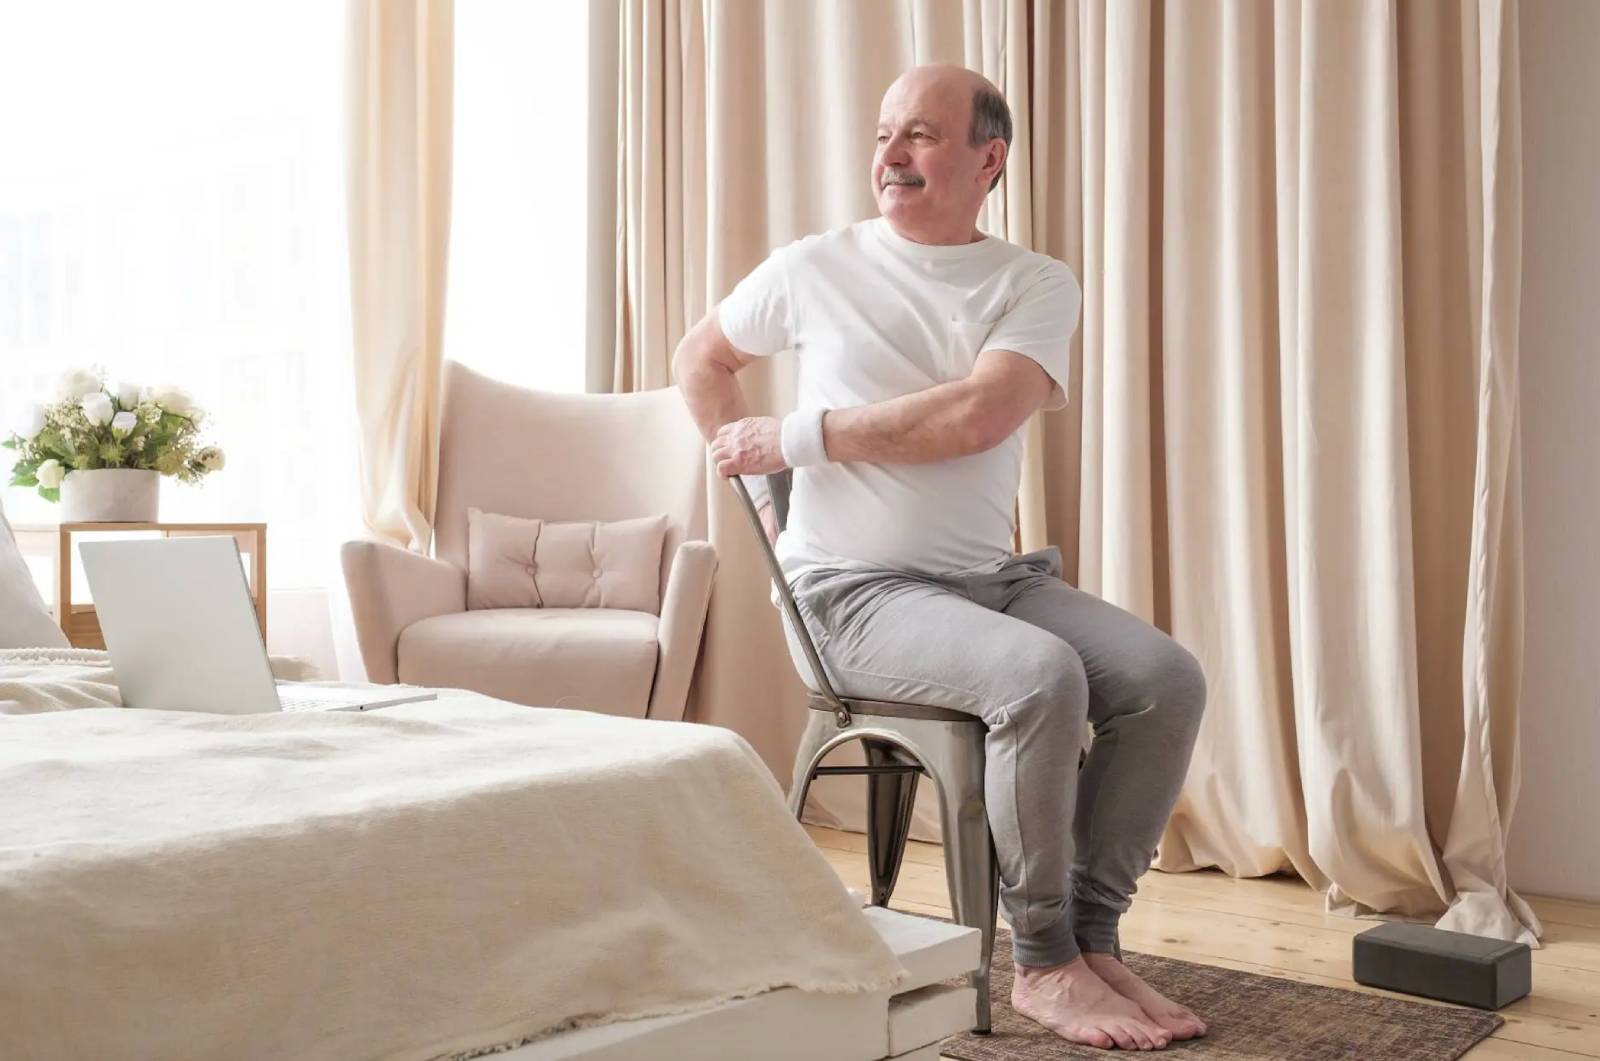 Senior man with dementia doing yoga on a chair.